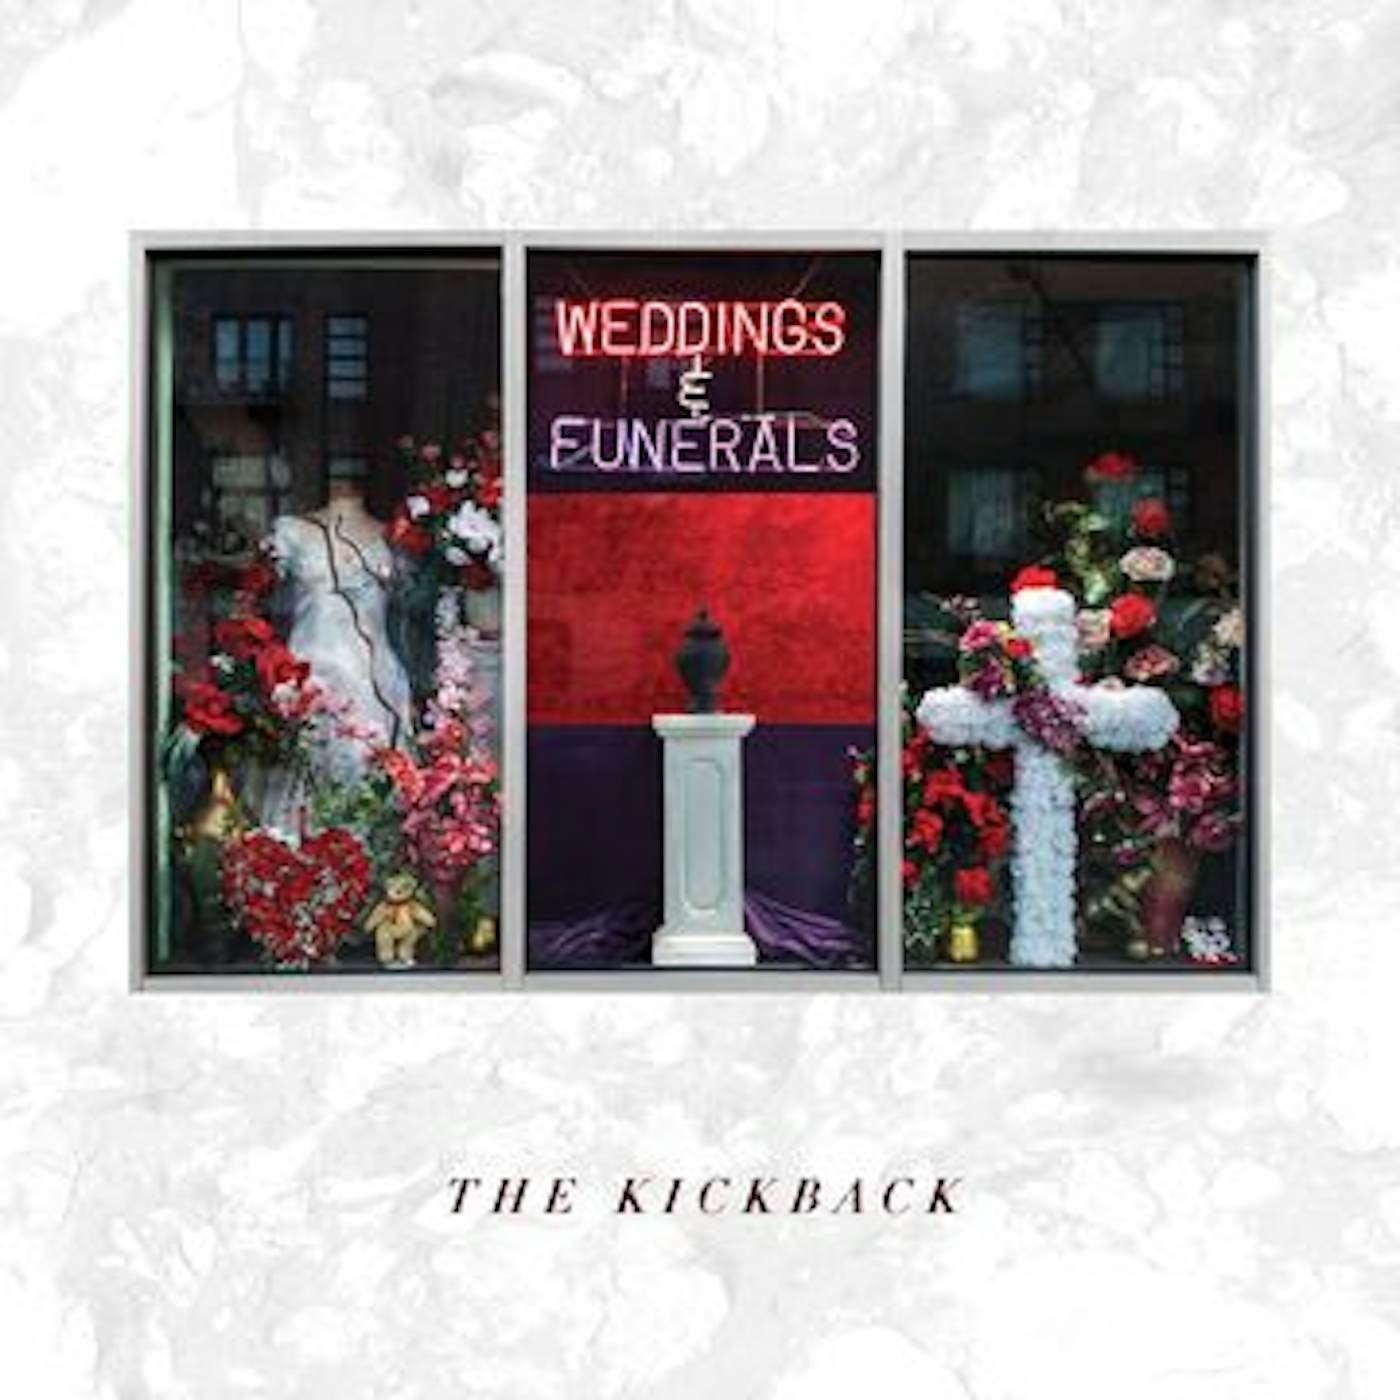 Kickback Weddings & Funerals Vinyl Record